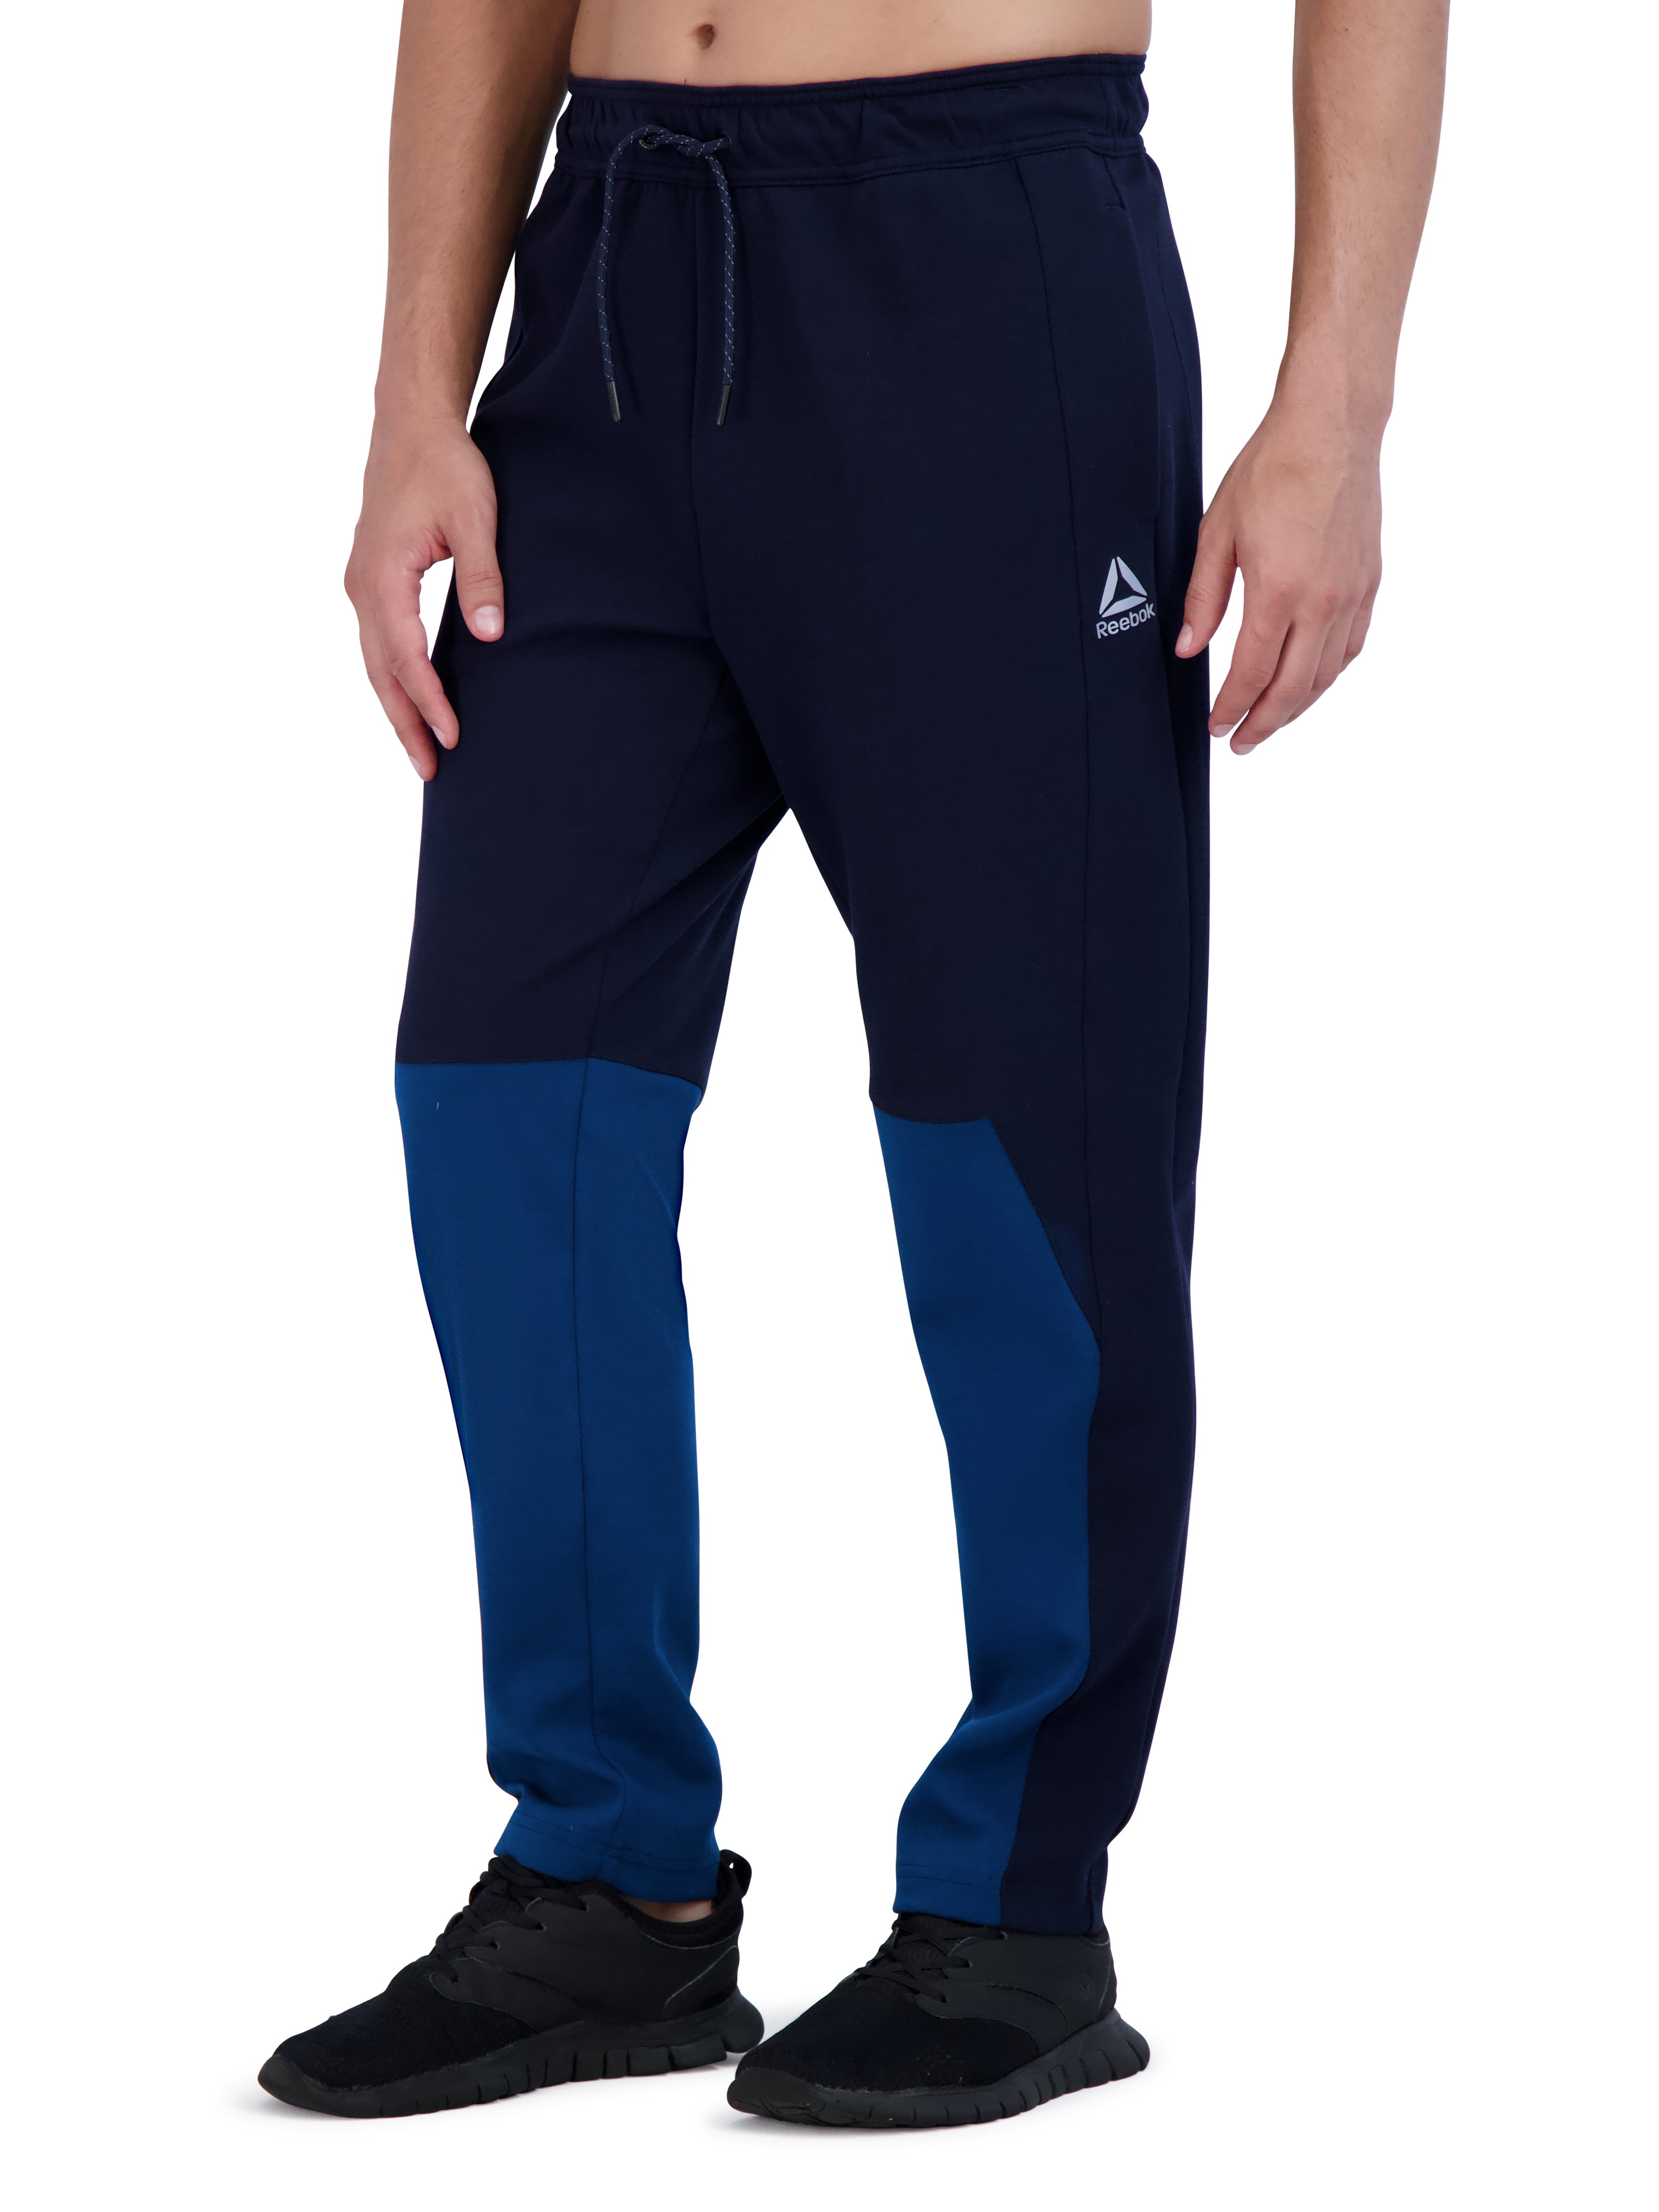 Reebok Men's Colorblocked Pants, up to Size 3XL 